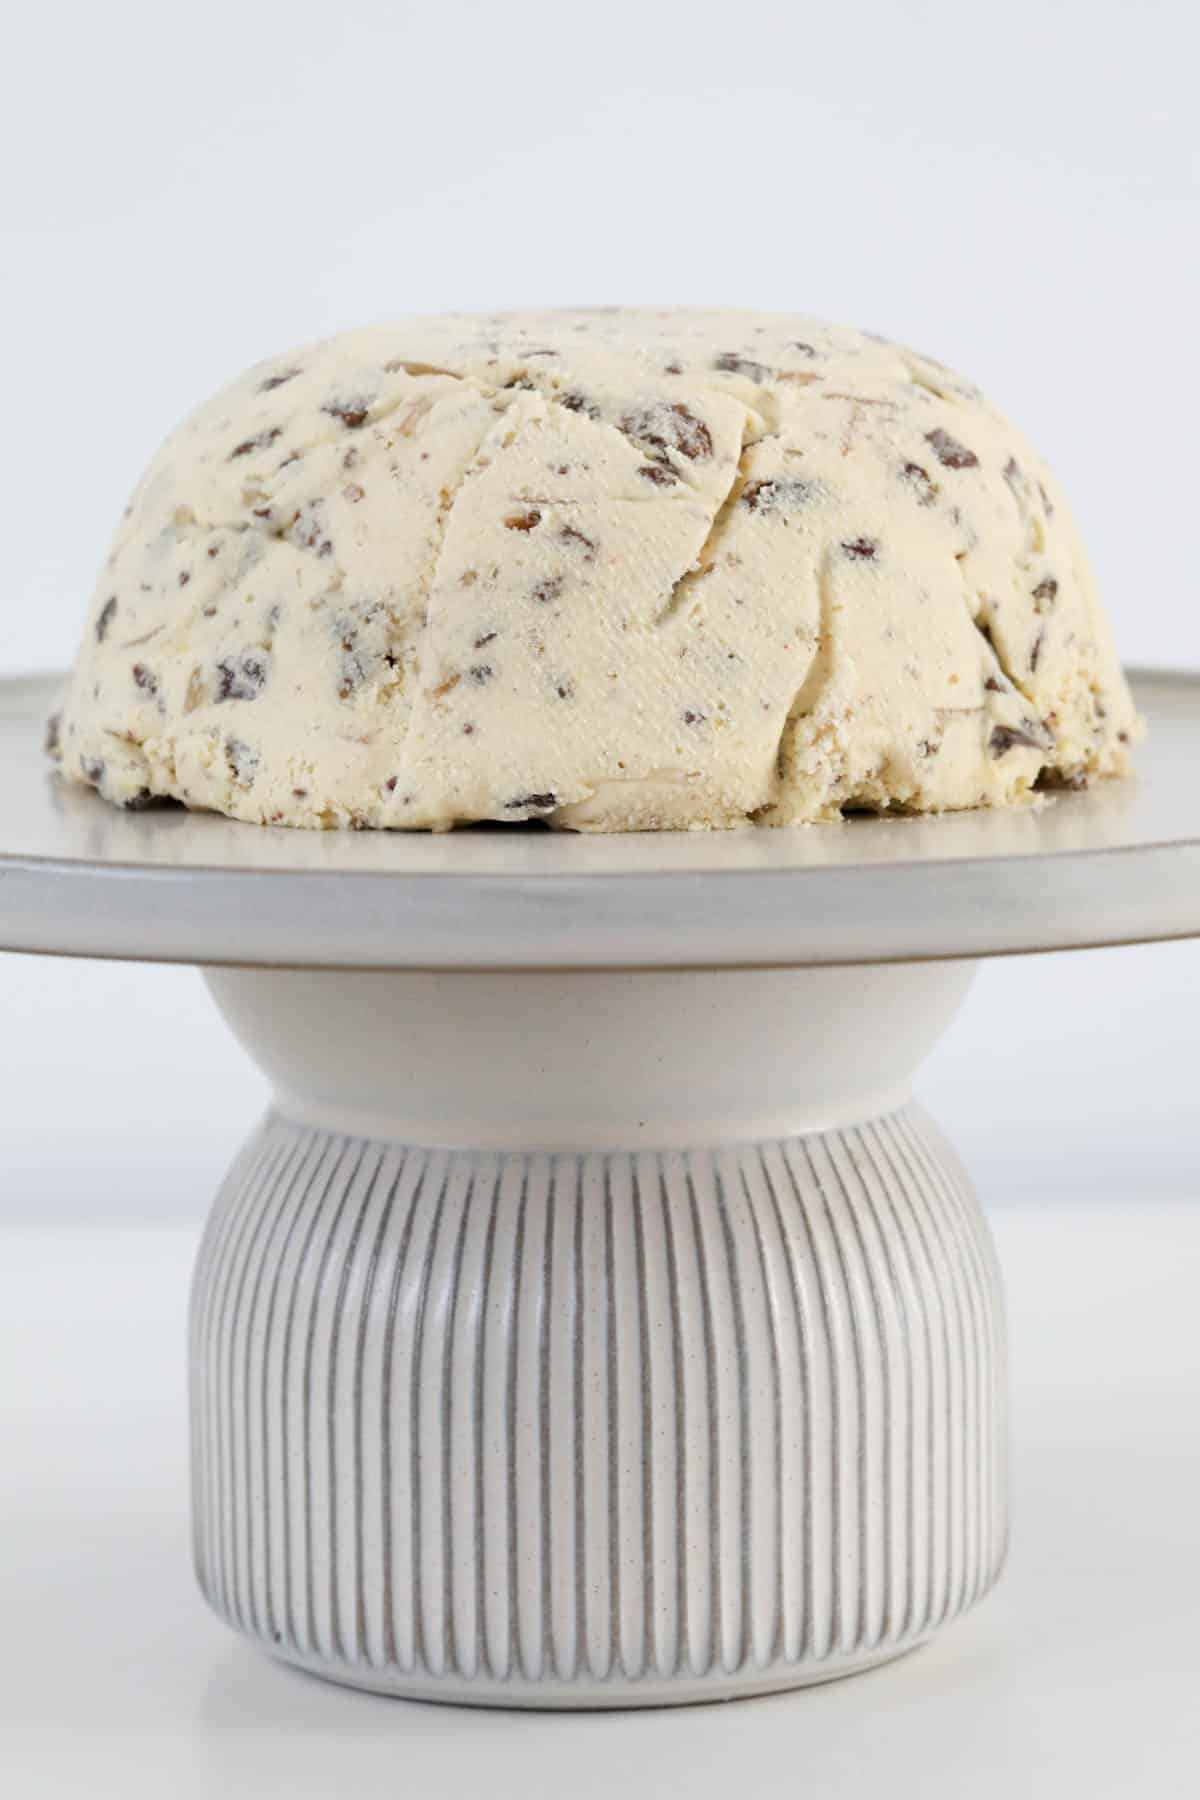 A creamy Pashka served on a cake stand,